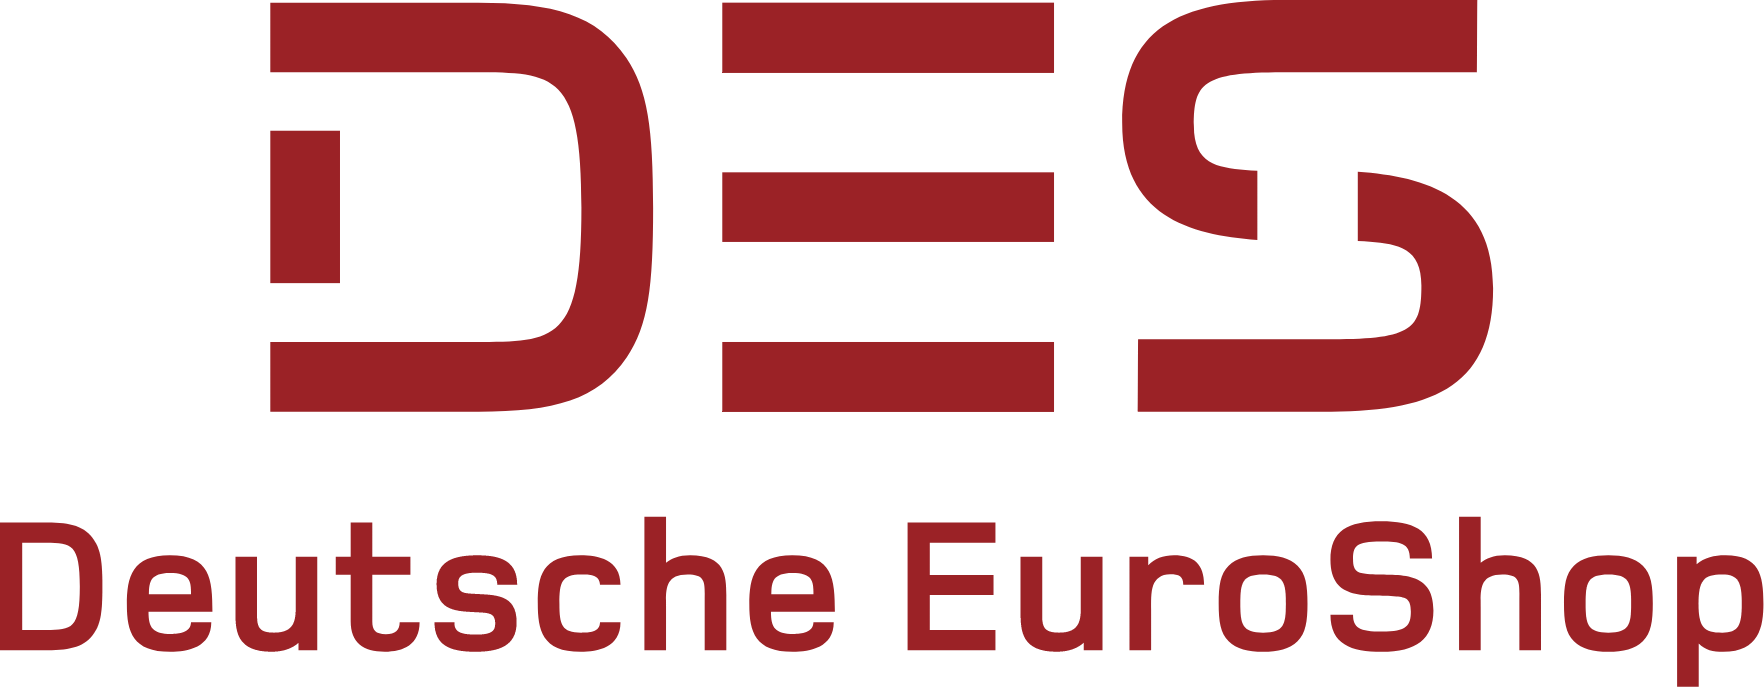 Deutsche EuroShop logo large (transparent PNG)